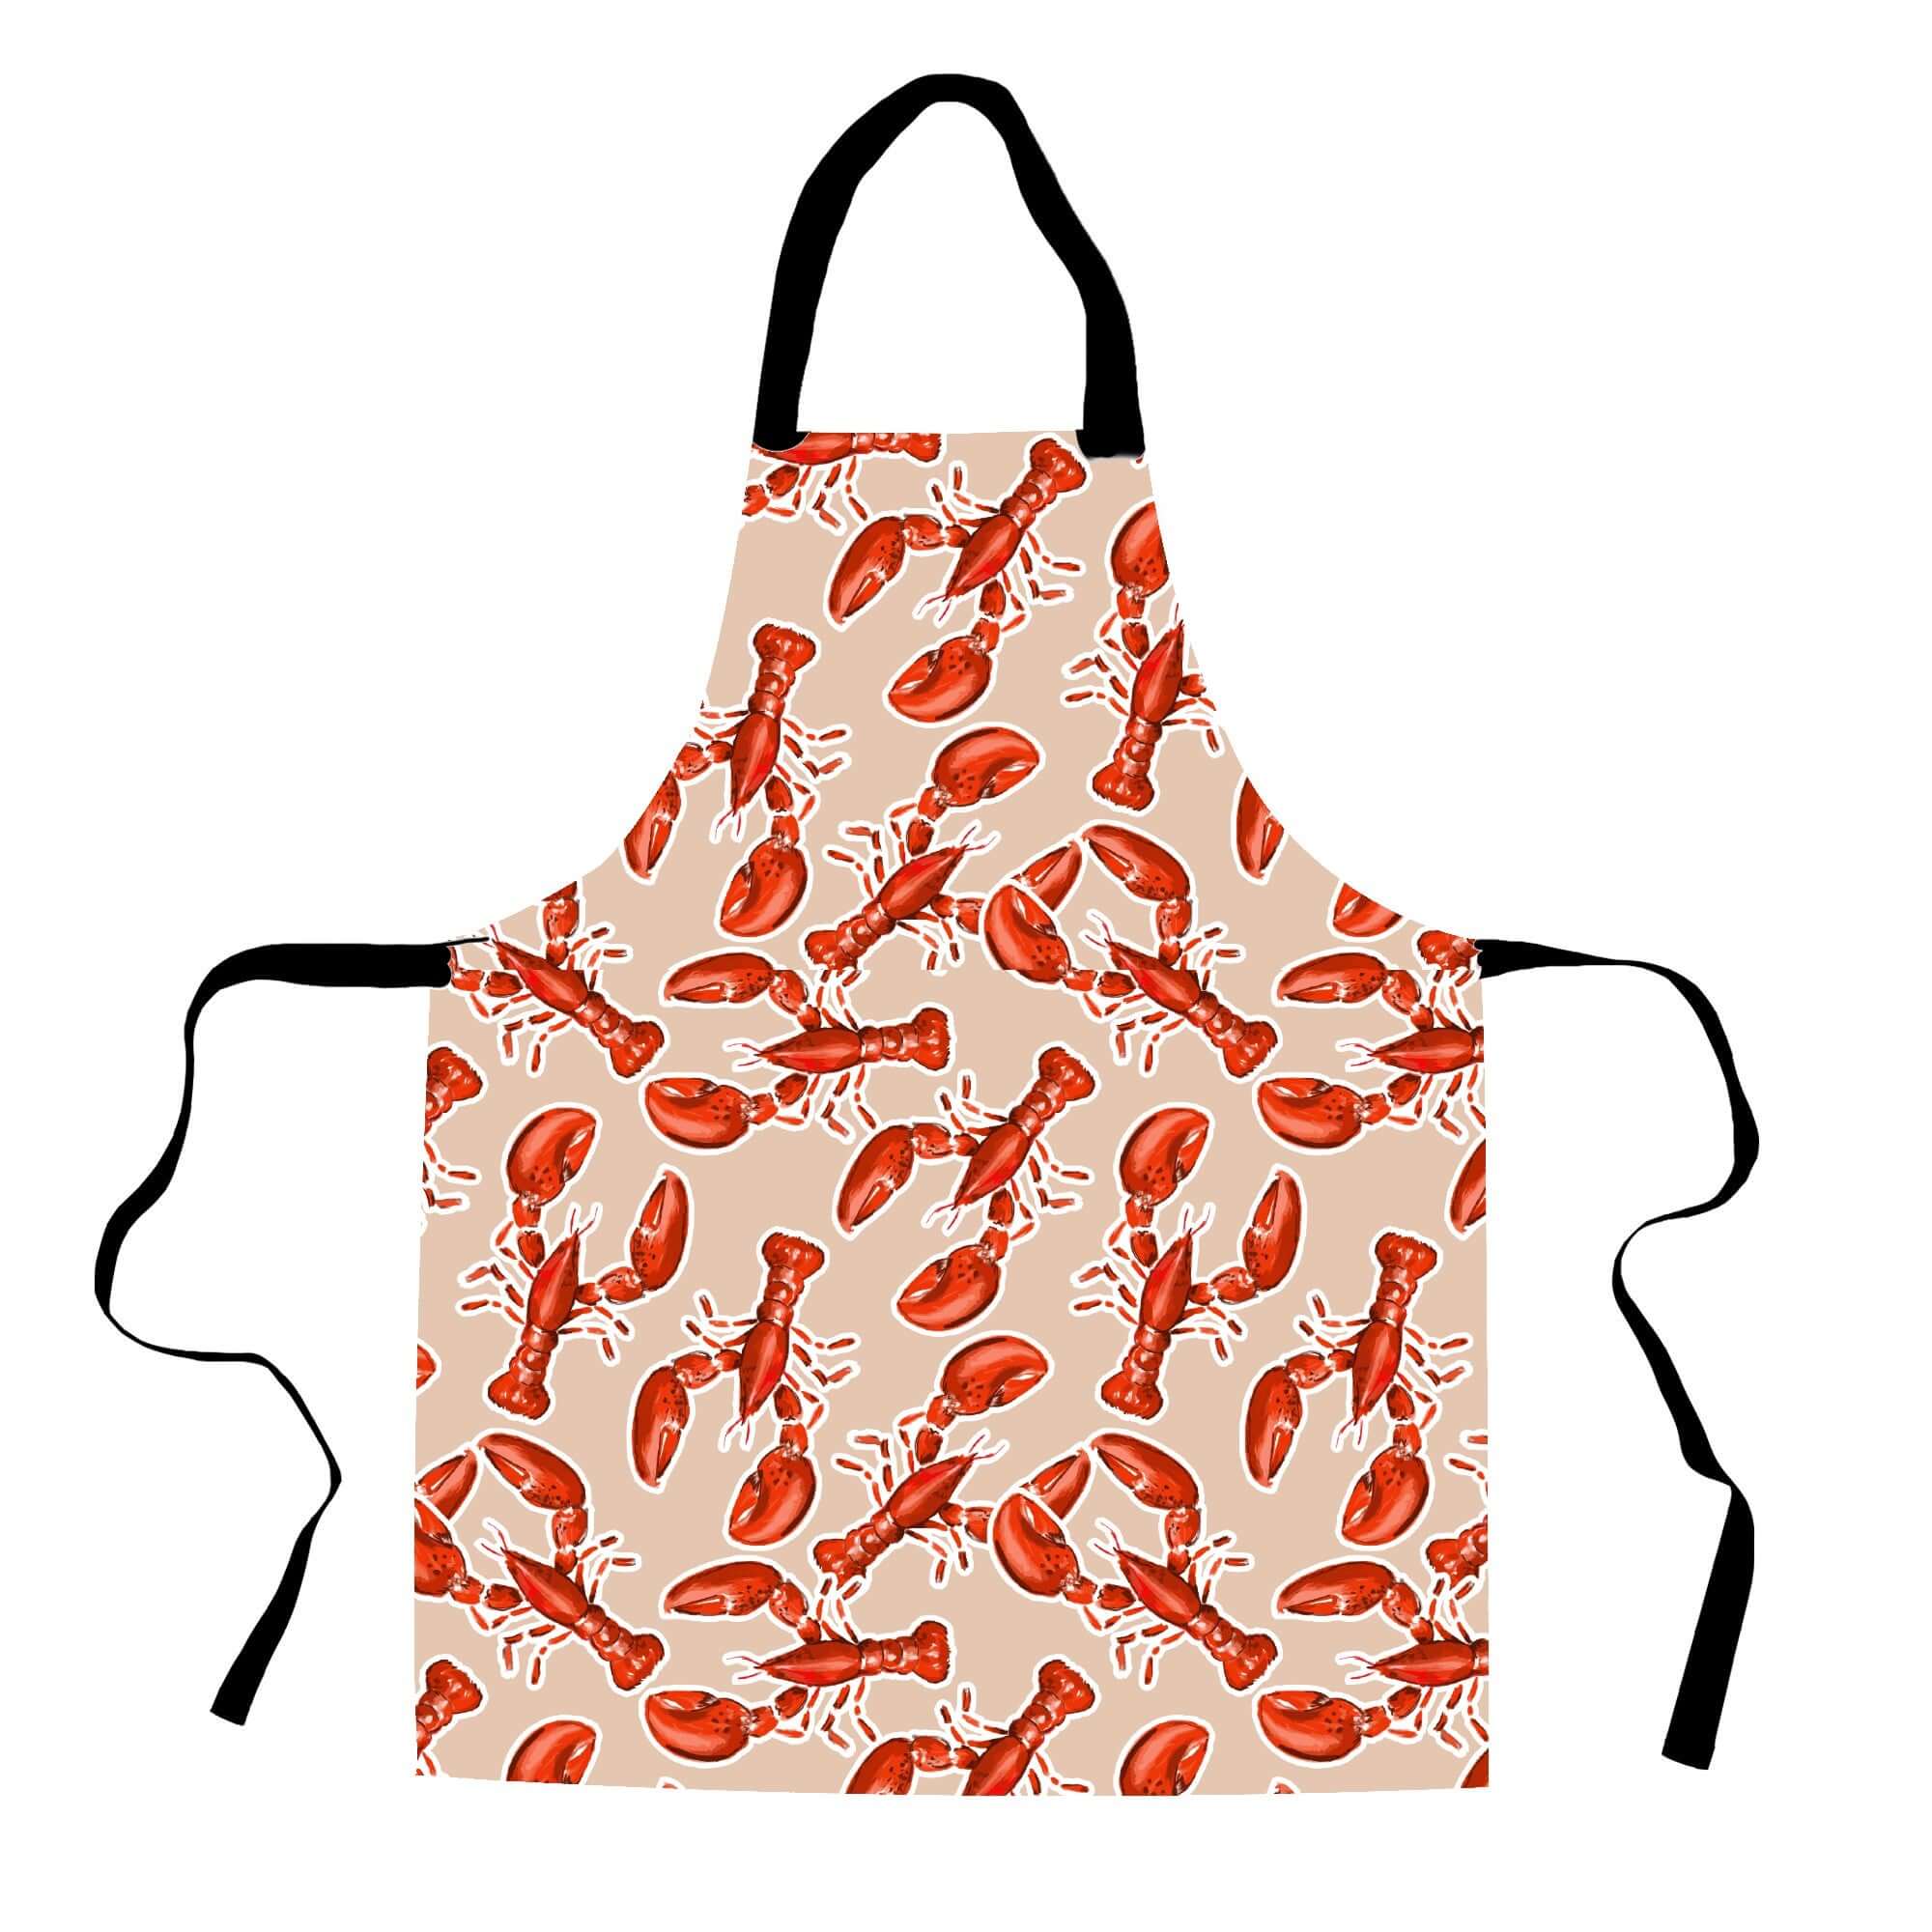 Print on demand custom gifts - Adults apron